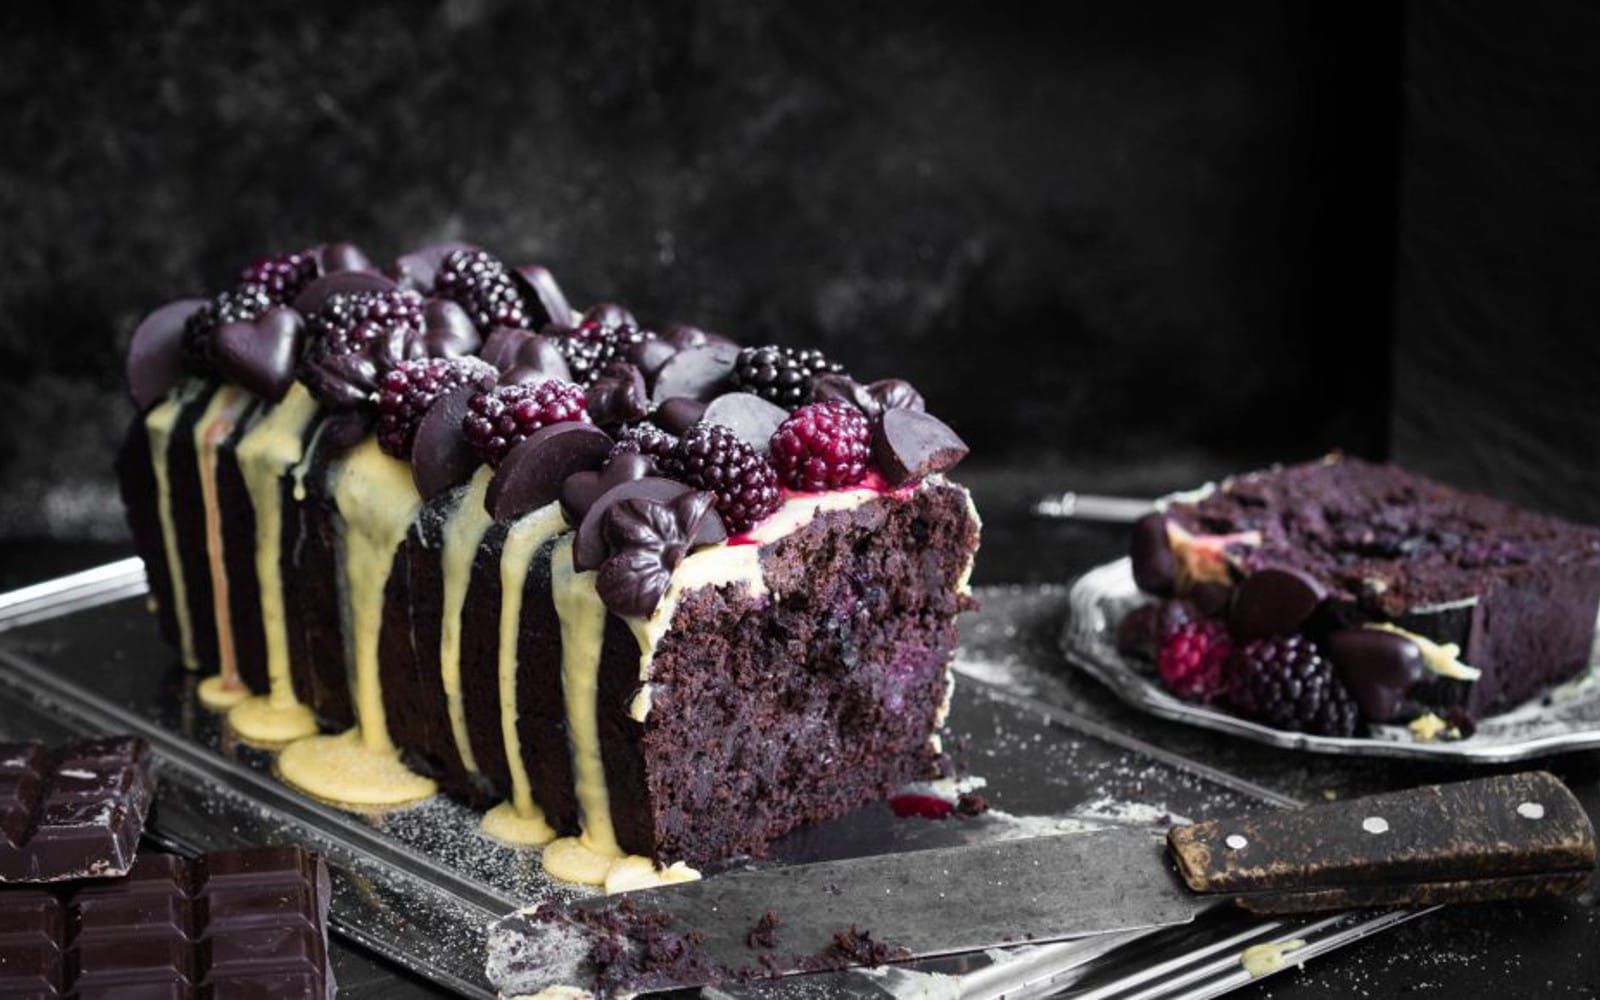 Sugar-Free Dark Chocolate and Blackberry Cake With Saffron Frosting